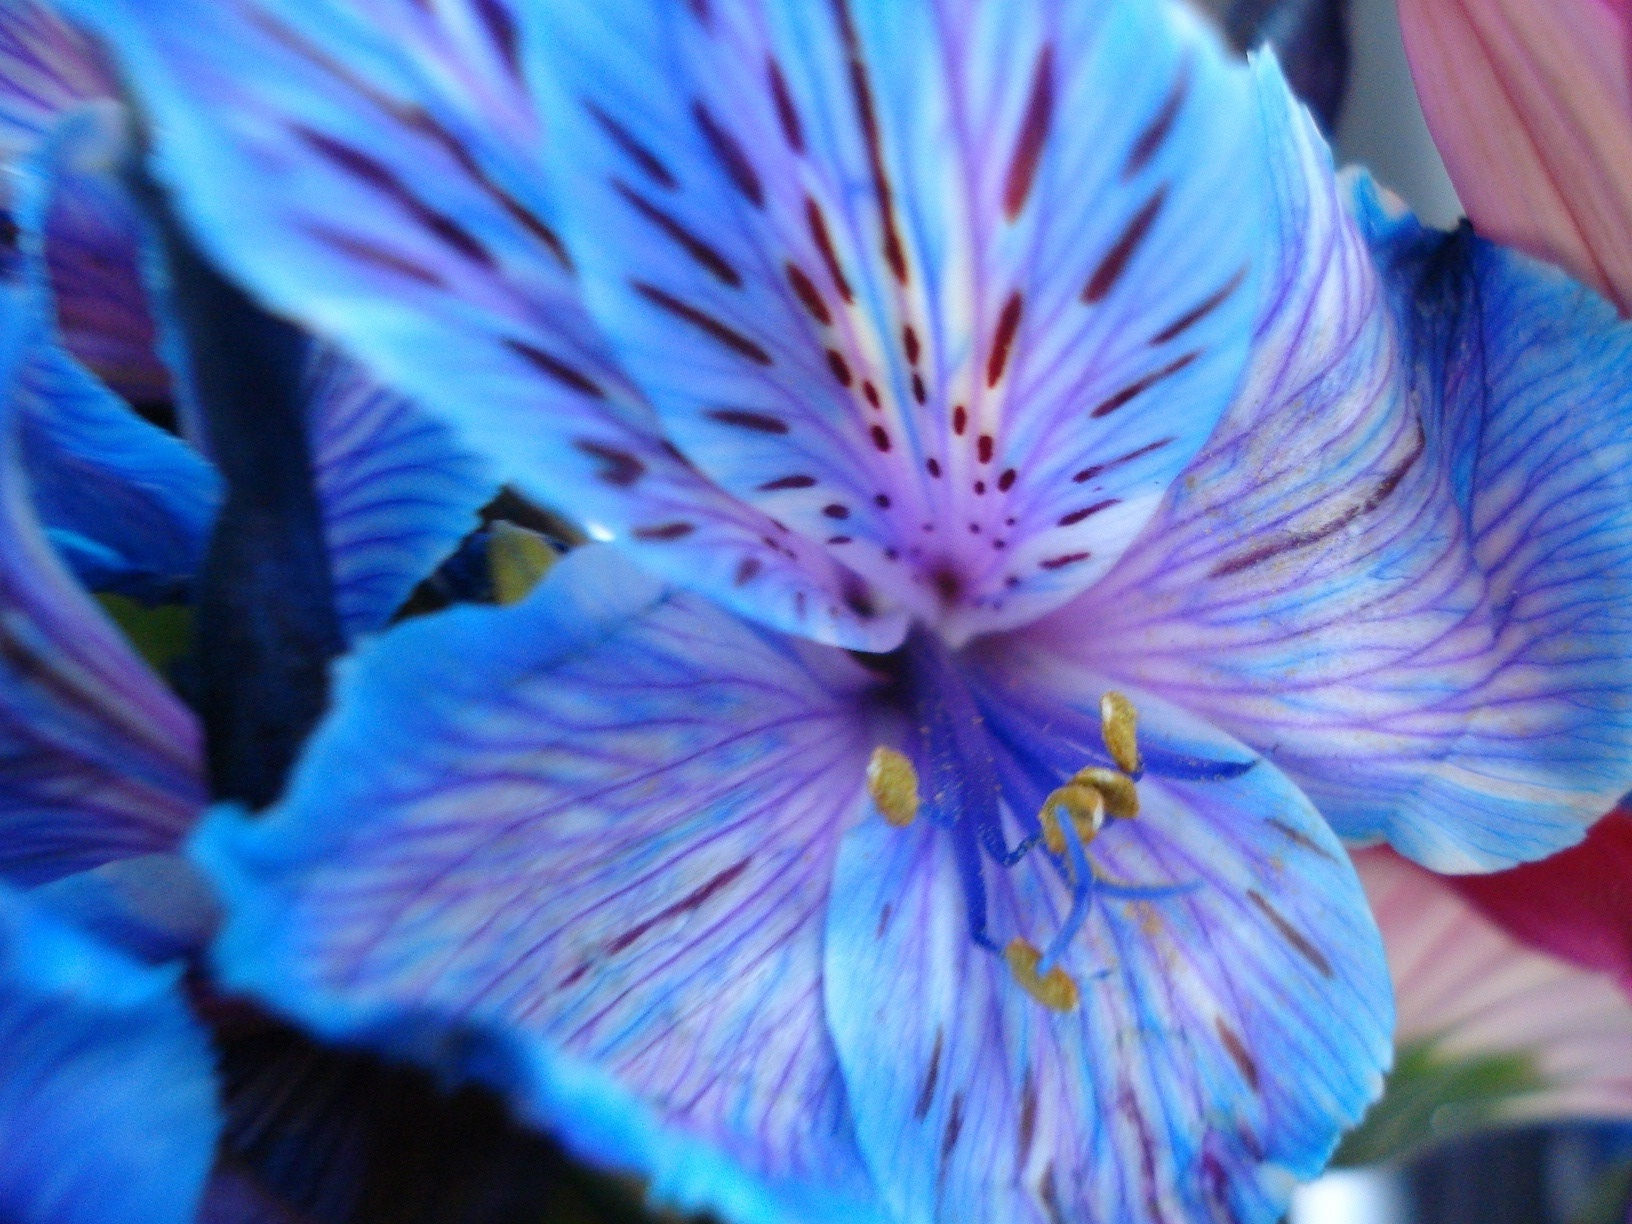 Beautiful Blue Flower Background